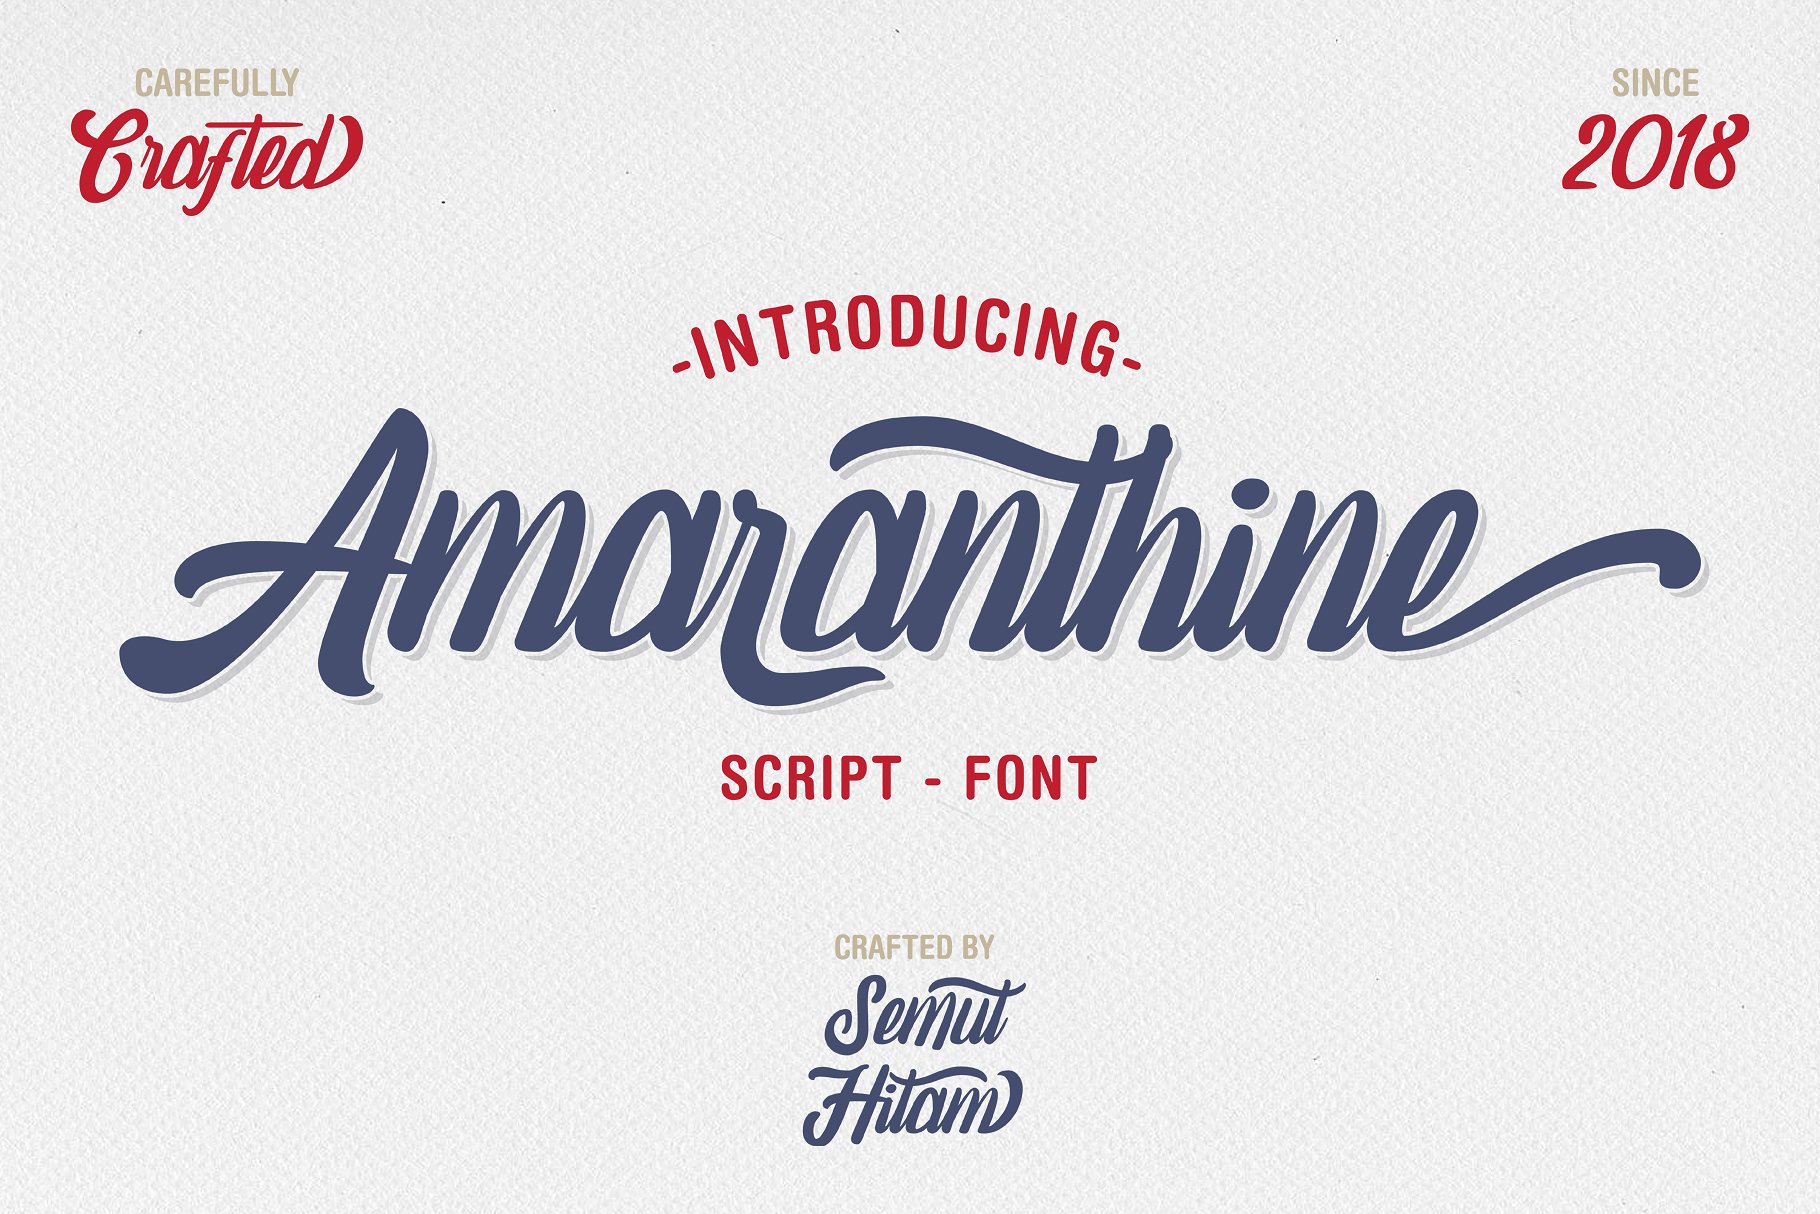 Amarantine script font to craft logotypes